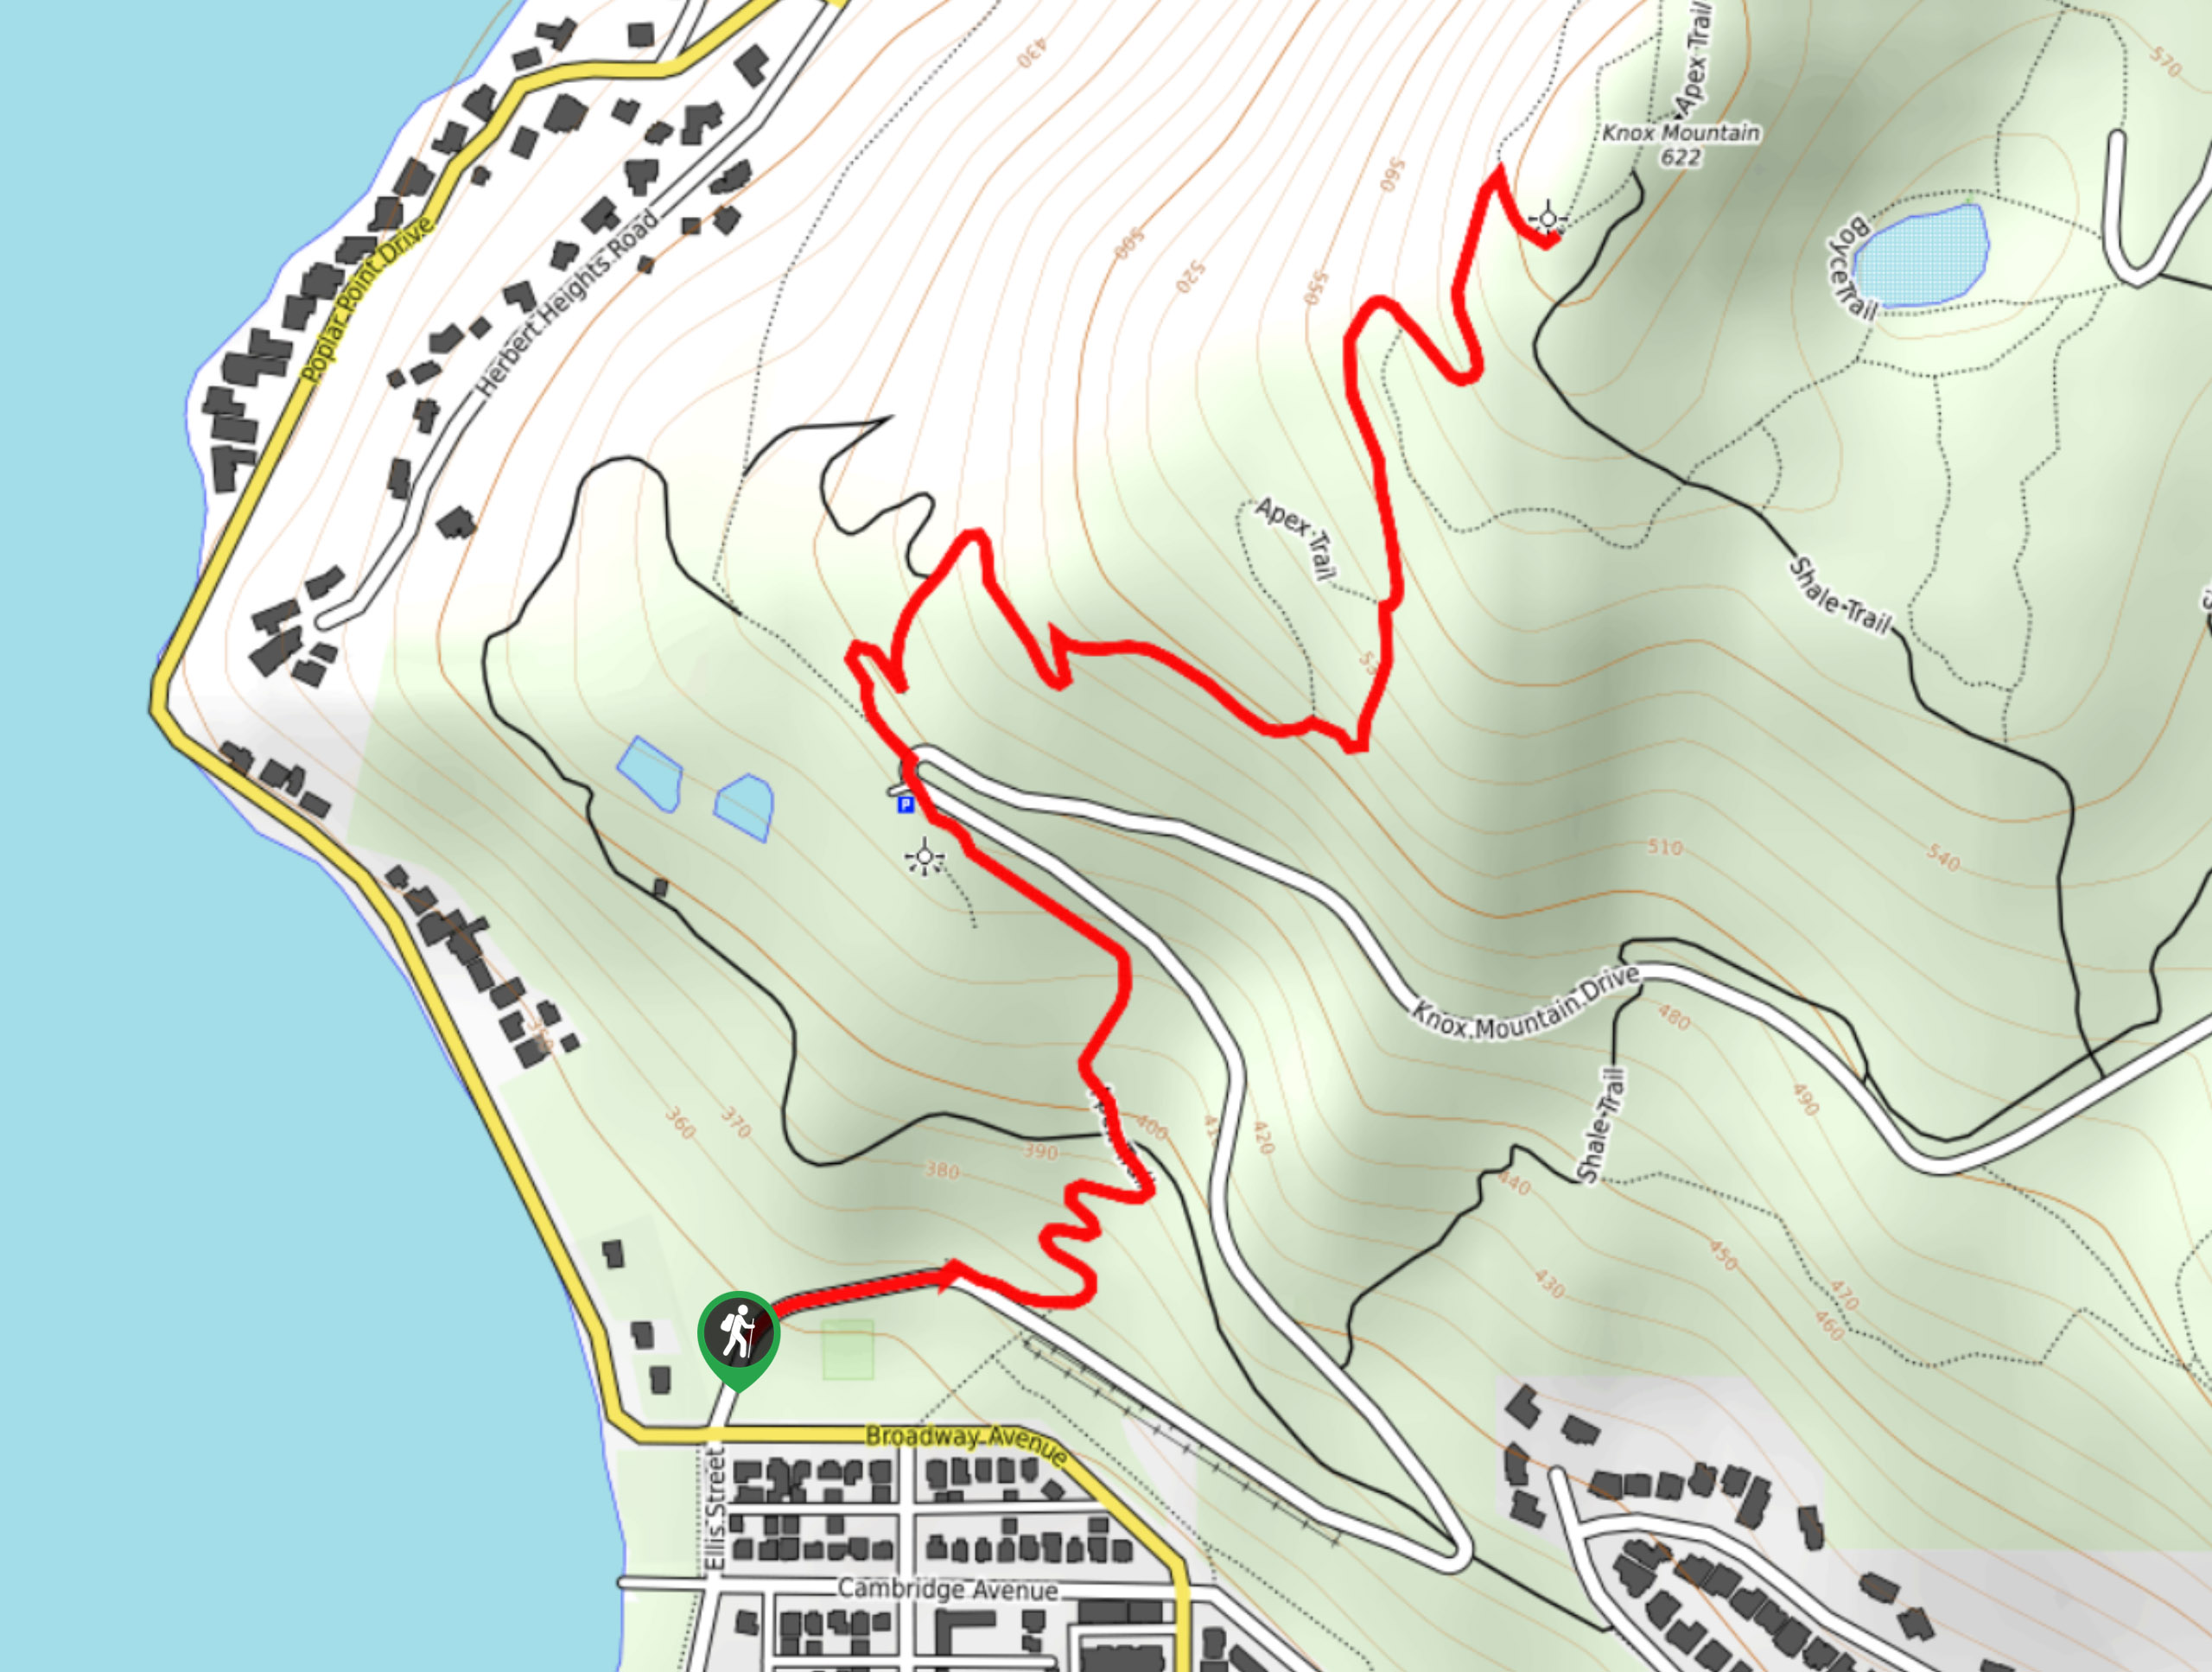 Knox Mountain via Apex Trail Map